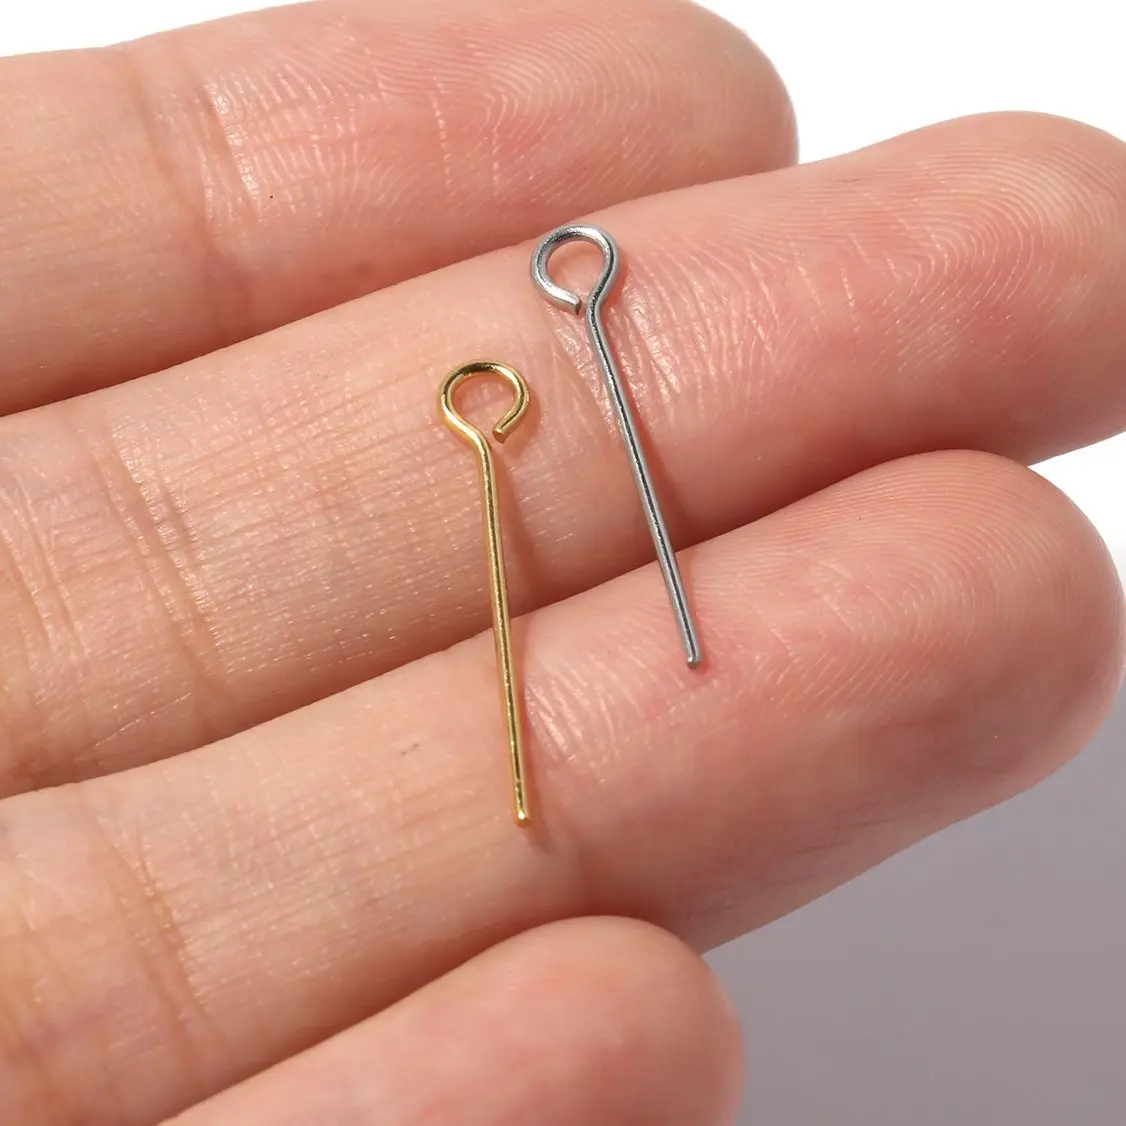 Head Pins & Eye Pins, Jewelry Findings